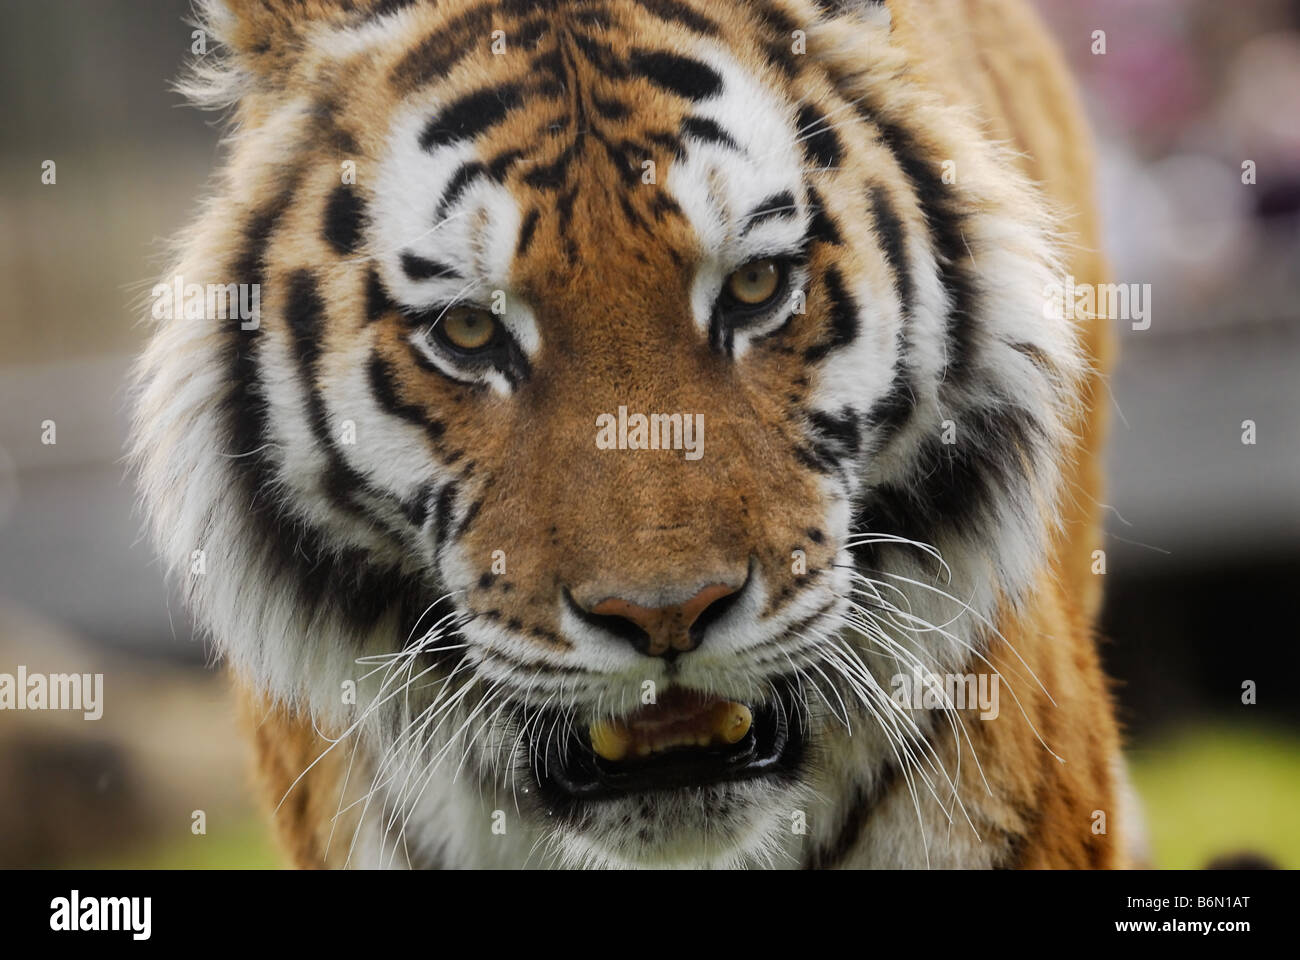 Close up of belle tiger regardant la caméra Banque D'Images